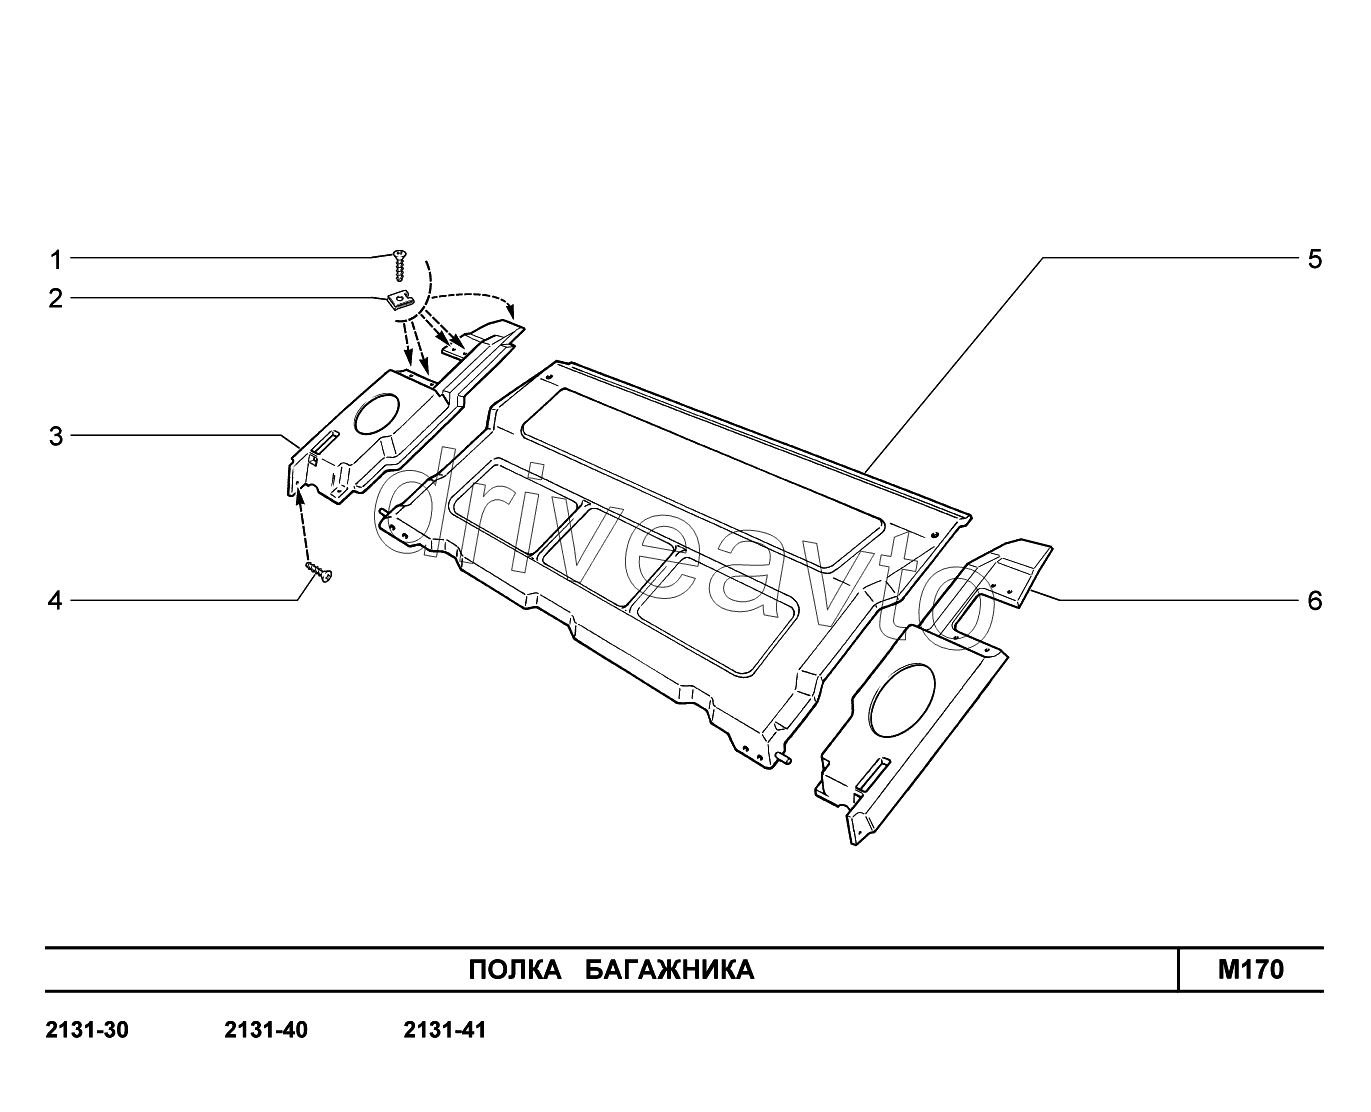 M170. Полка багажника